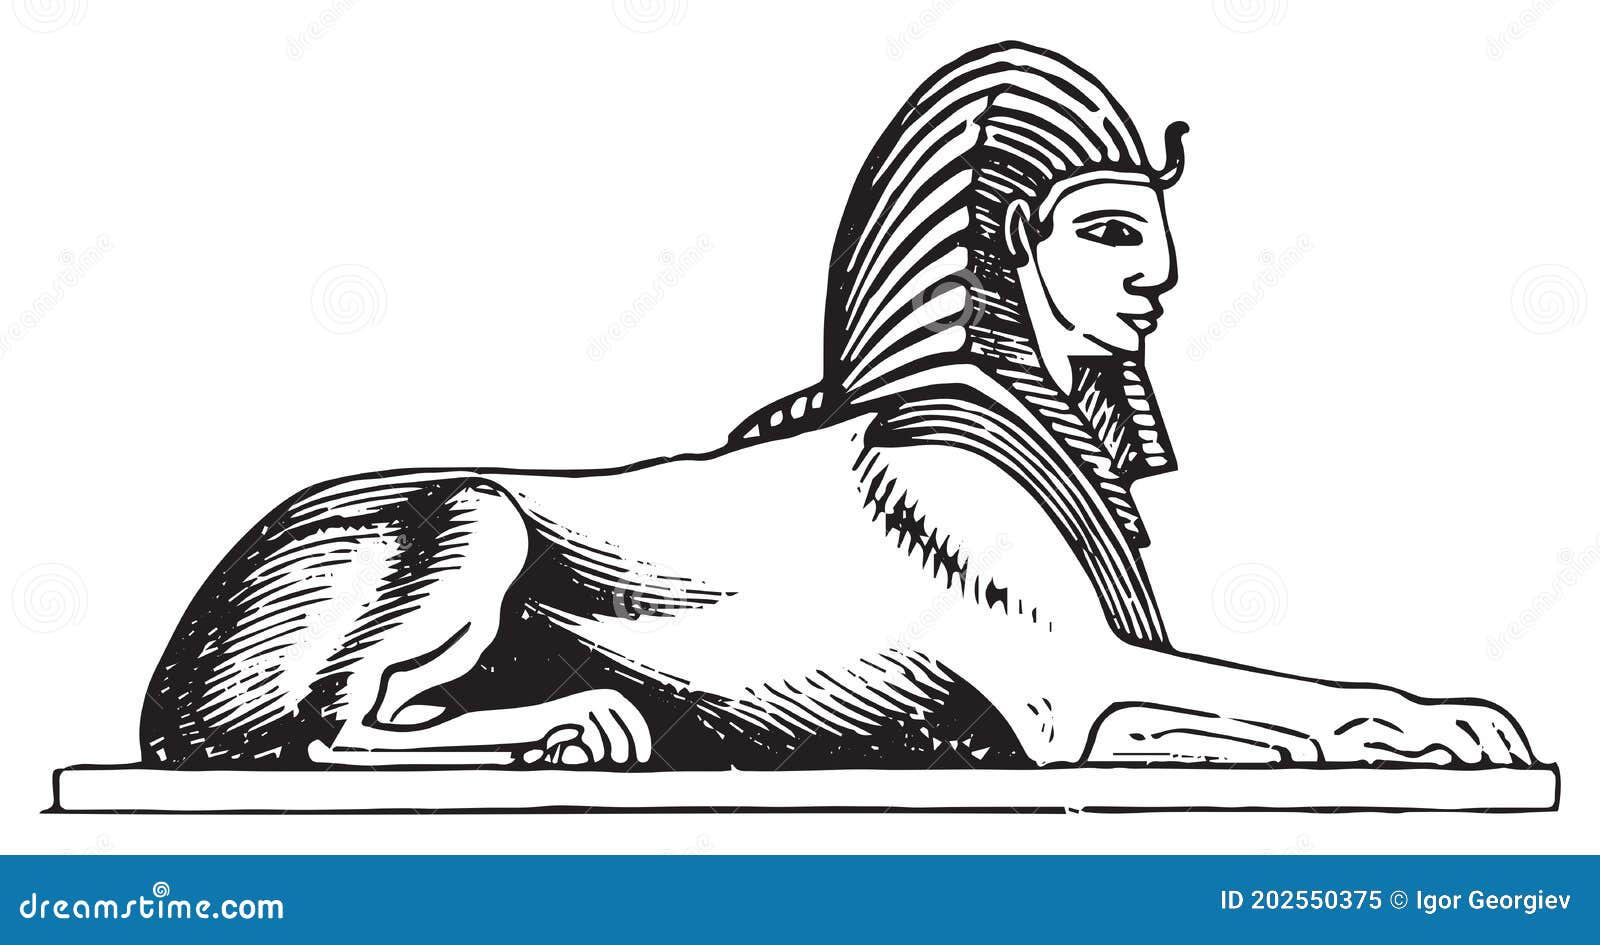 1804 Sphinx Tattoo Images Stock Photos  Vectors  Shutterstock